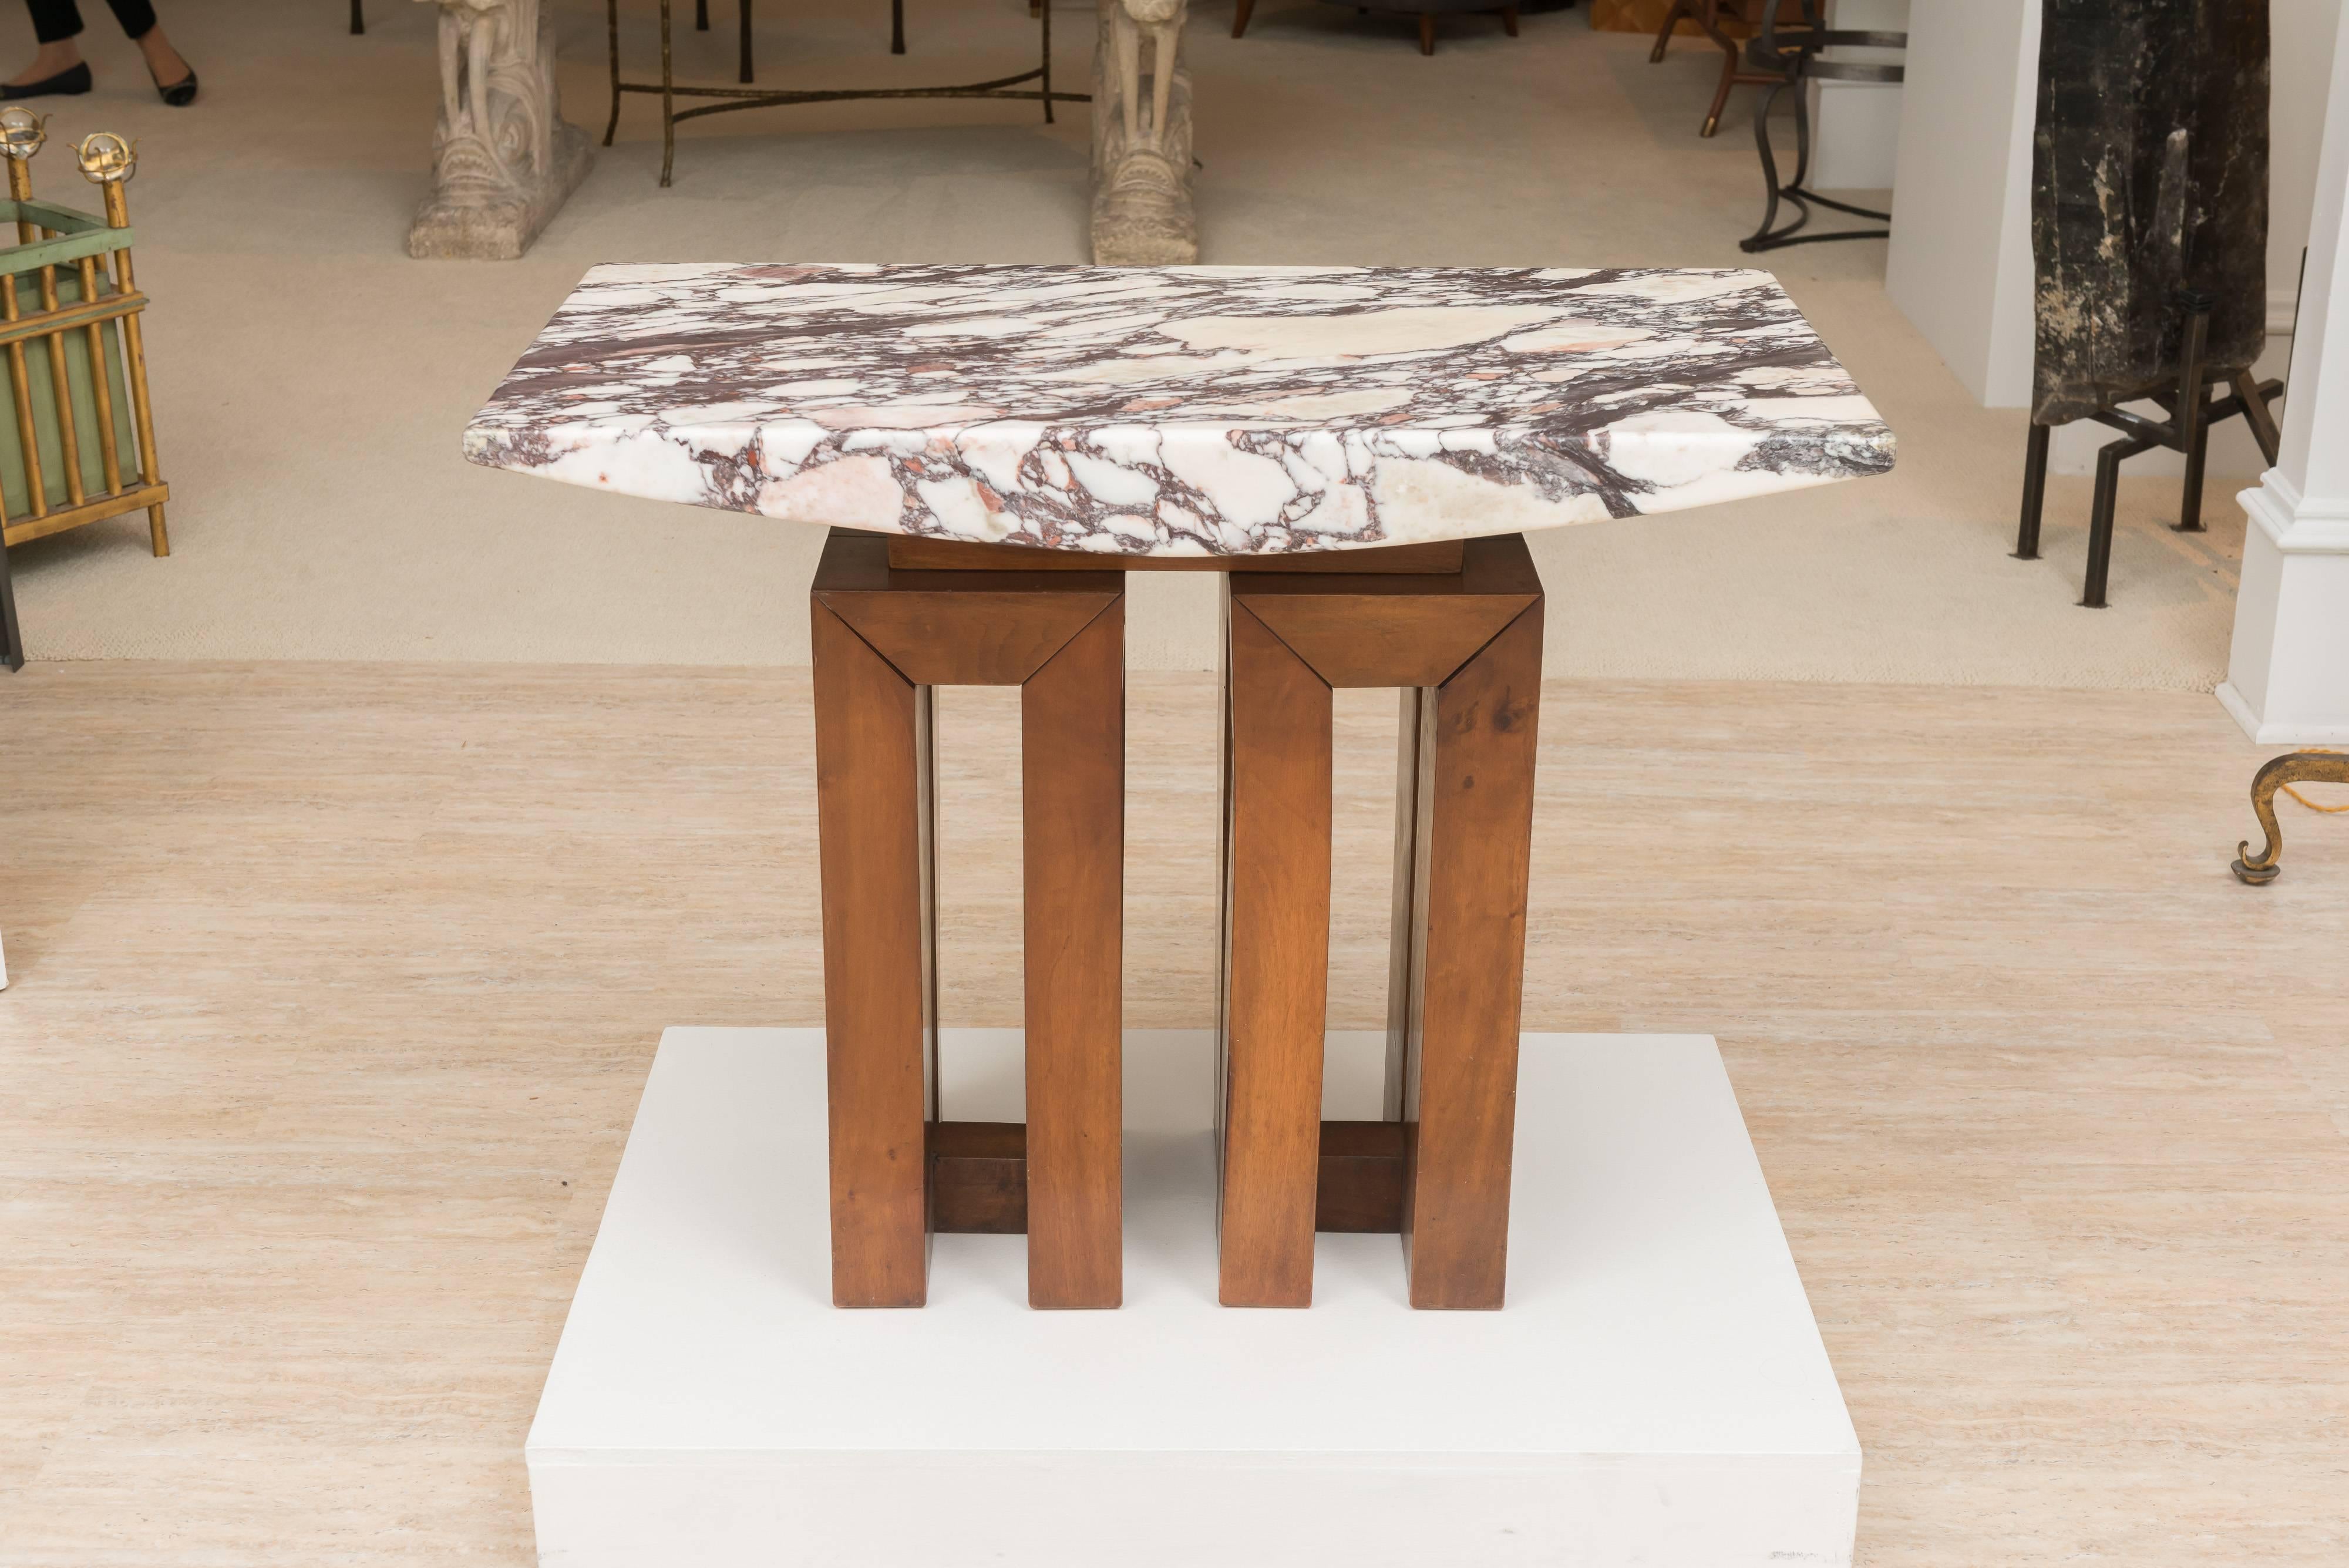 Rare Brescia marble and walnut base center table by the Italian architect Pierluigi Spadolini,
Florence, circa 1962.